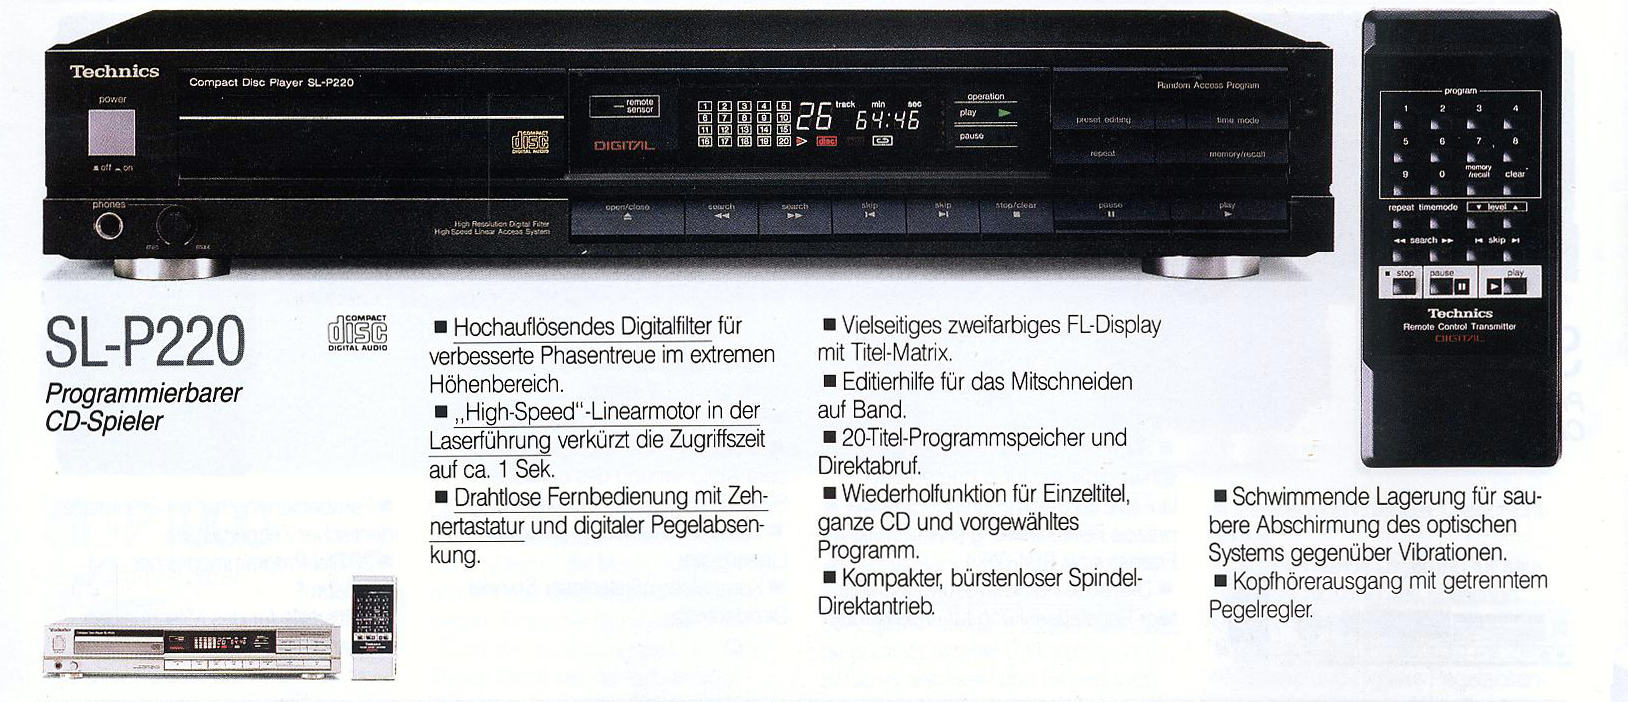 Technics SL-P 220-Prospekt-1988.jpg